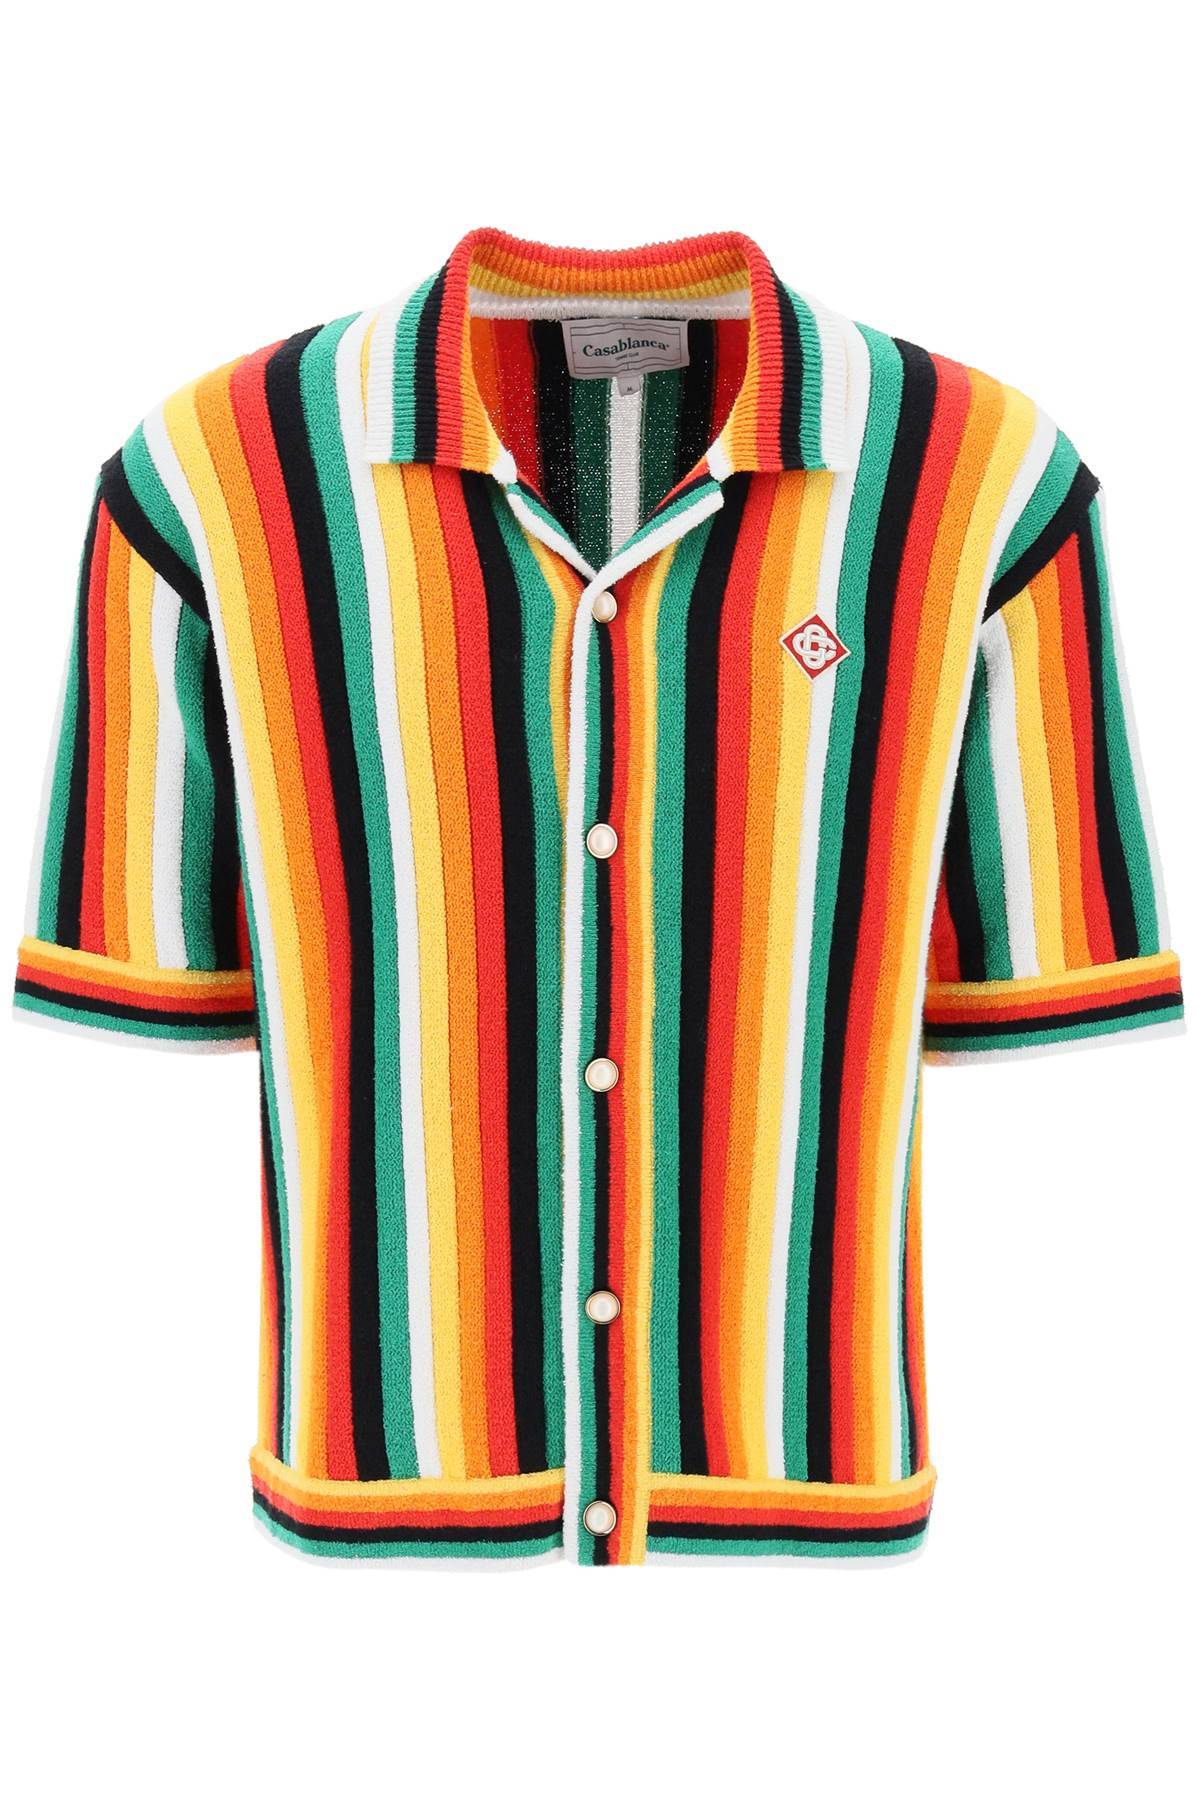 Casablanca CASABLANCA striped knit bowling shirt with nine words